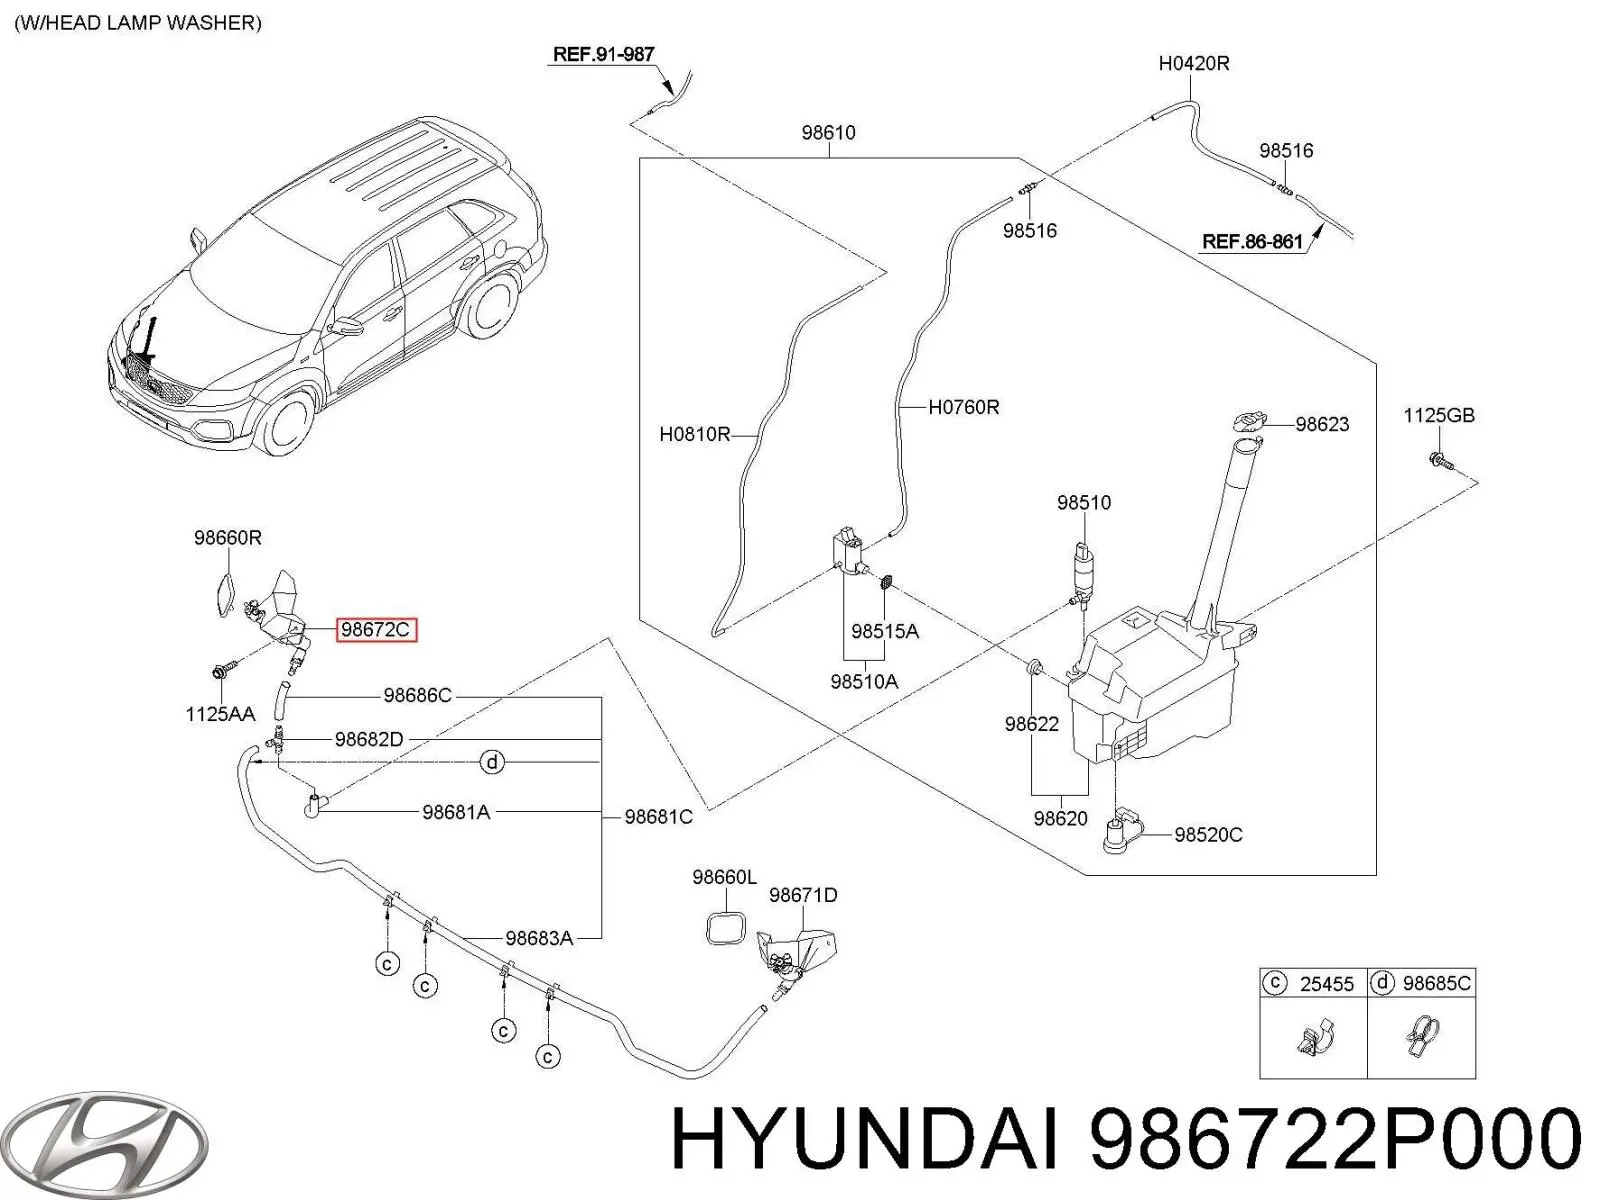 986722P000 Hyundai/Kia tobera de agua regadora, lavado de faros, delantera derecha